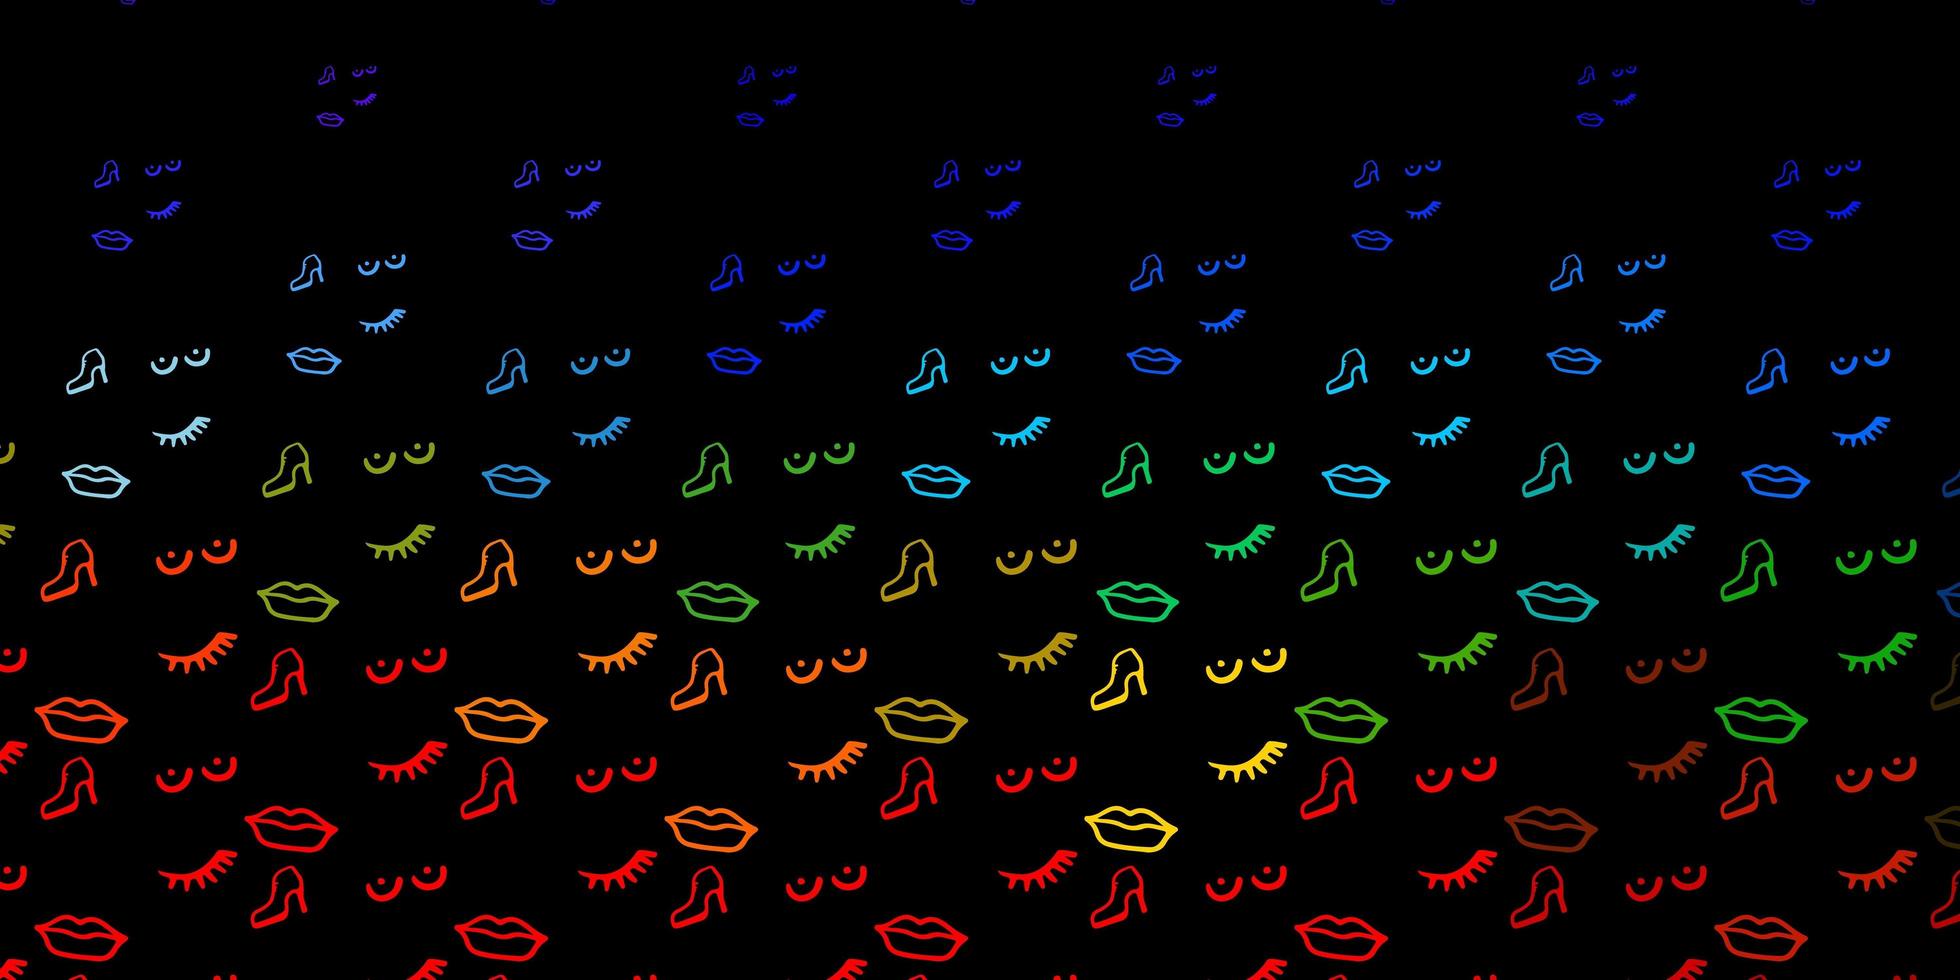 patrón de vector multicolor oscuro con elementos de feminismo.